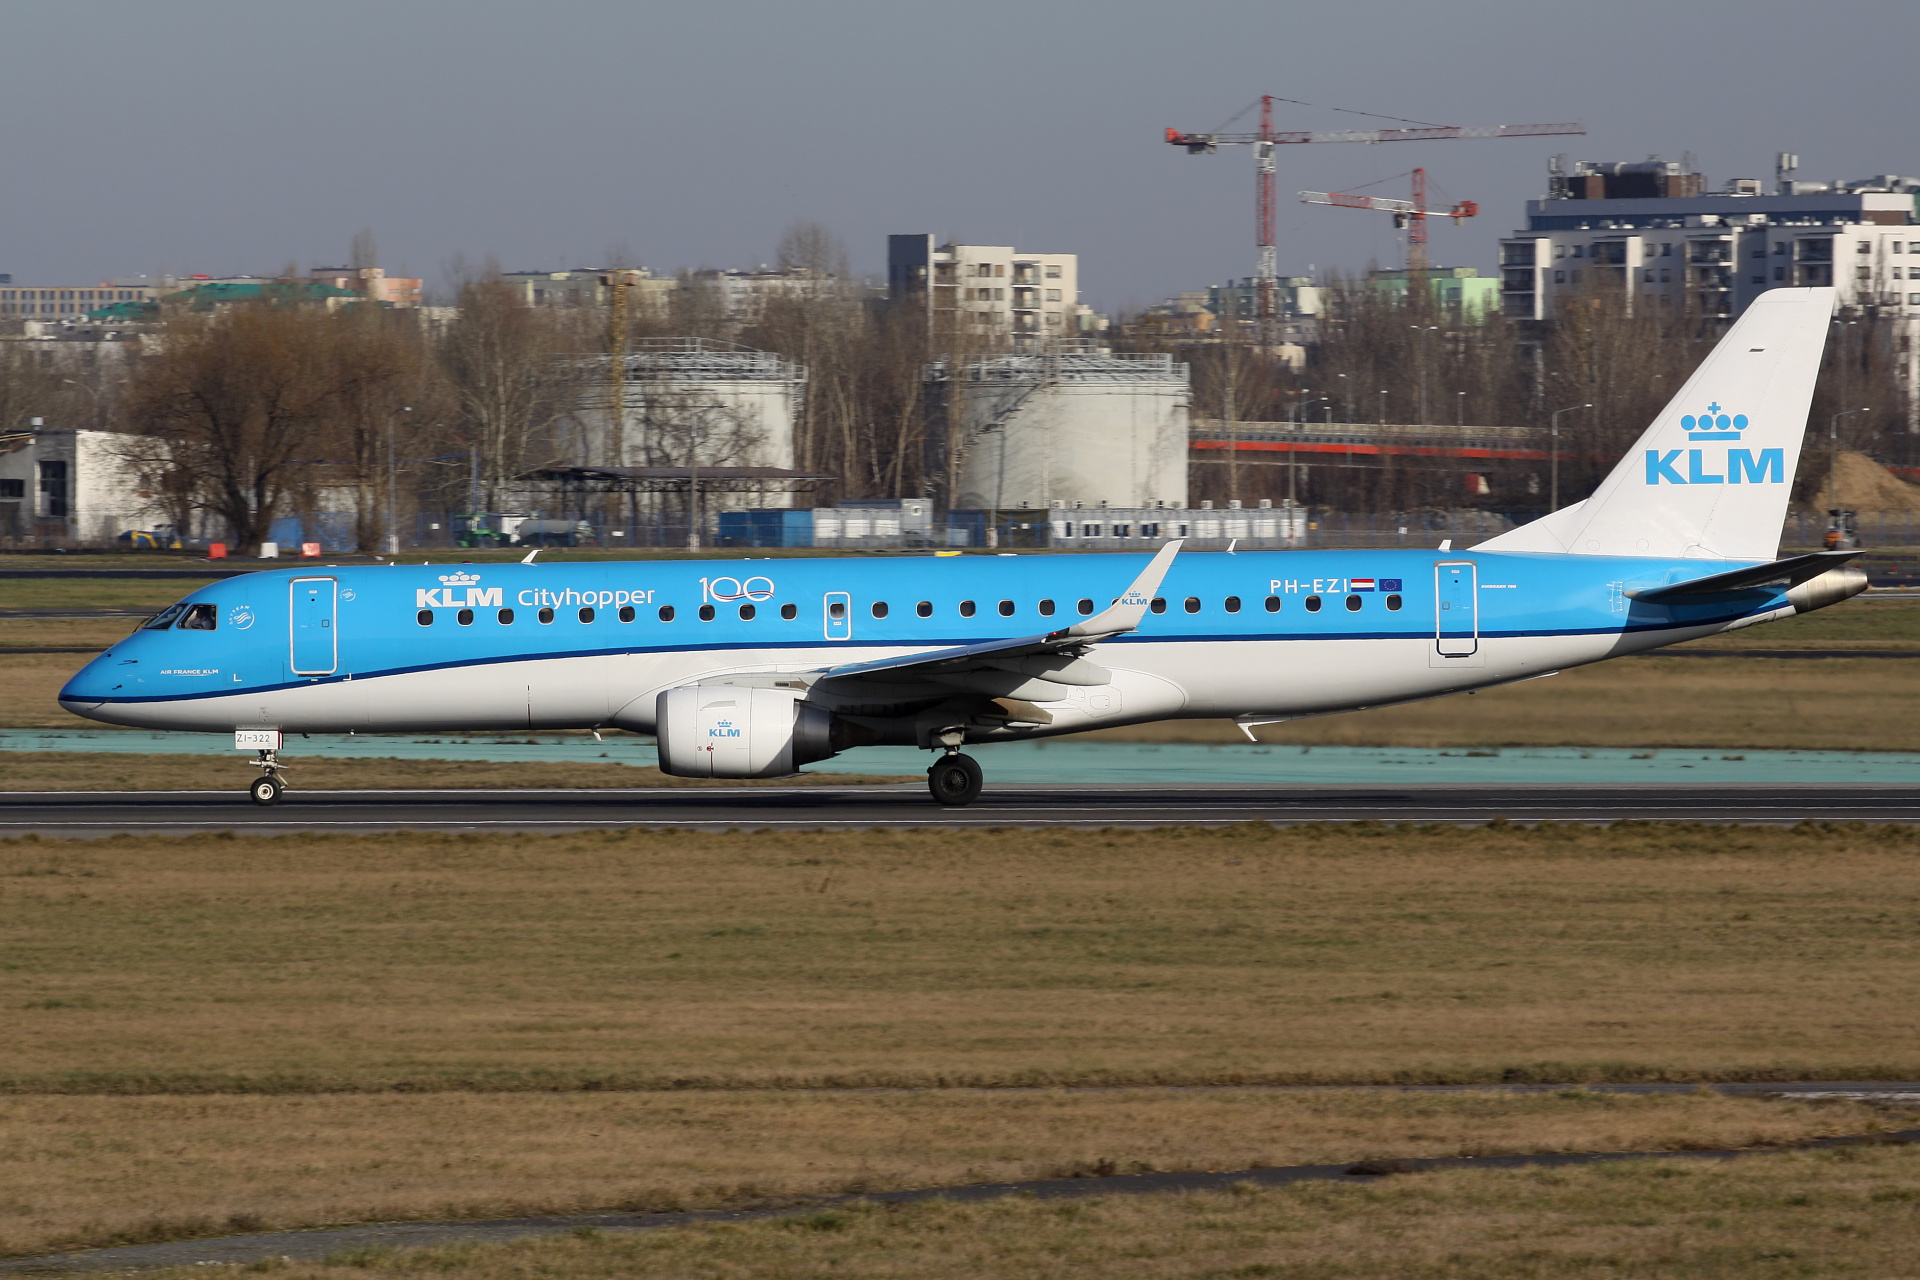 PH-EZI (100 years livery) (Aircraft » EPWA Spotting » Embraer E190 » KLM Cityhopper)